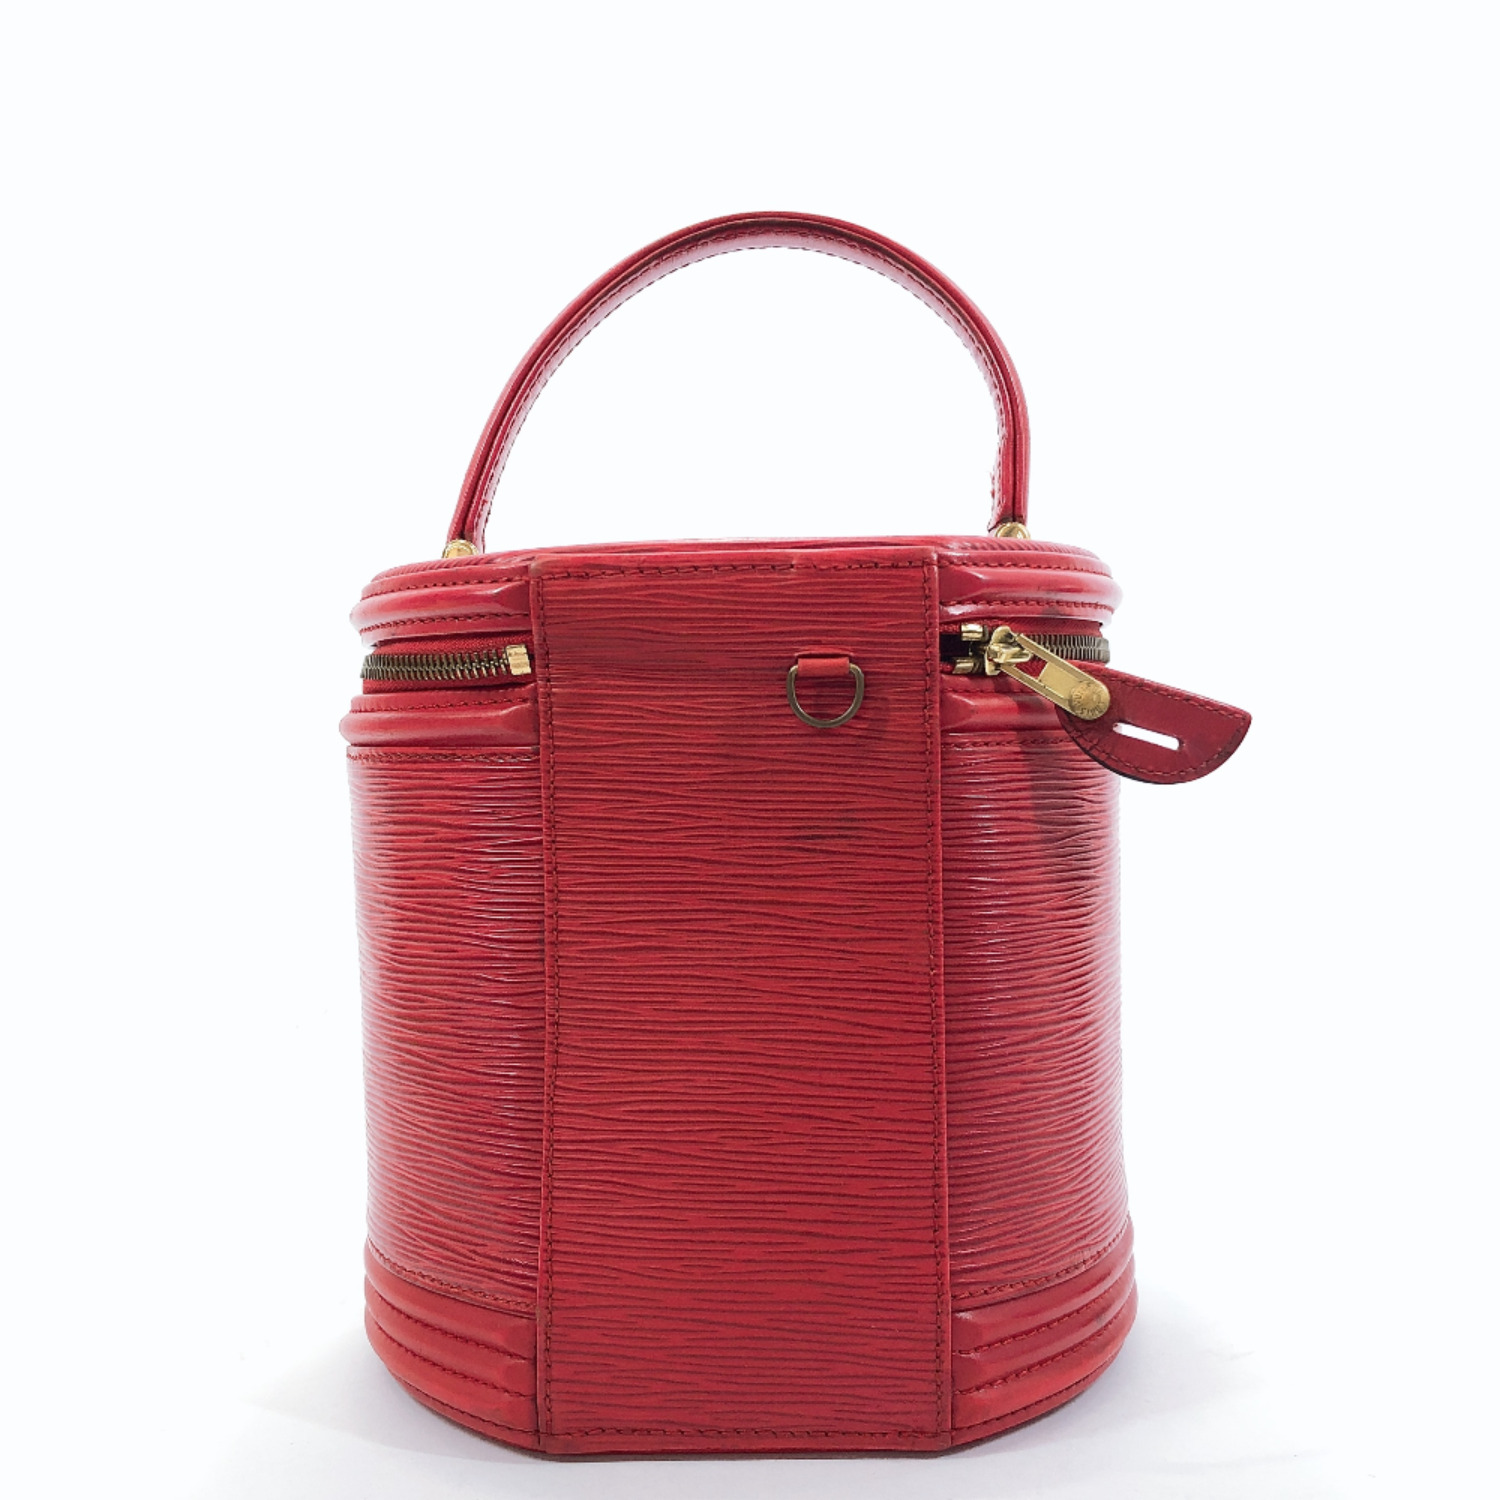 LOUIS VUITTON M48037 Vanity bag Cannes Handbag Castilian Red Epi Leather Women | eBay